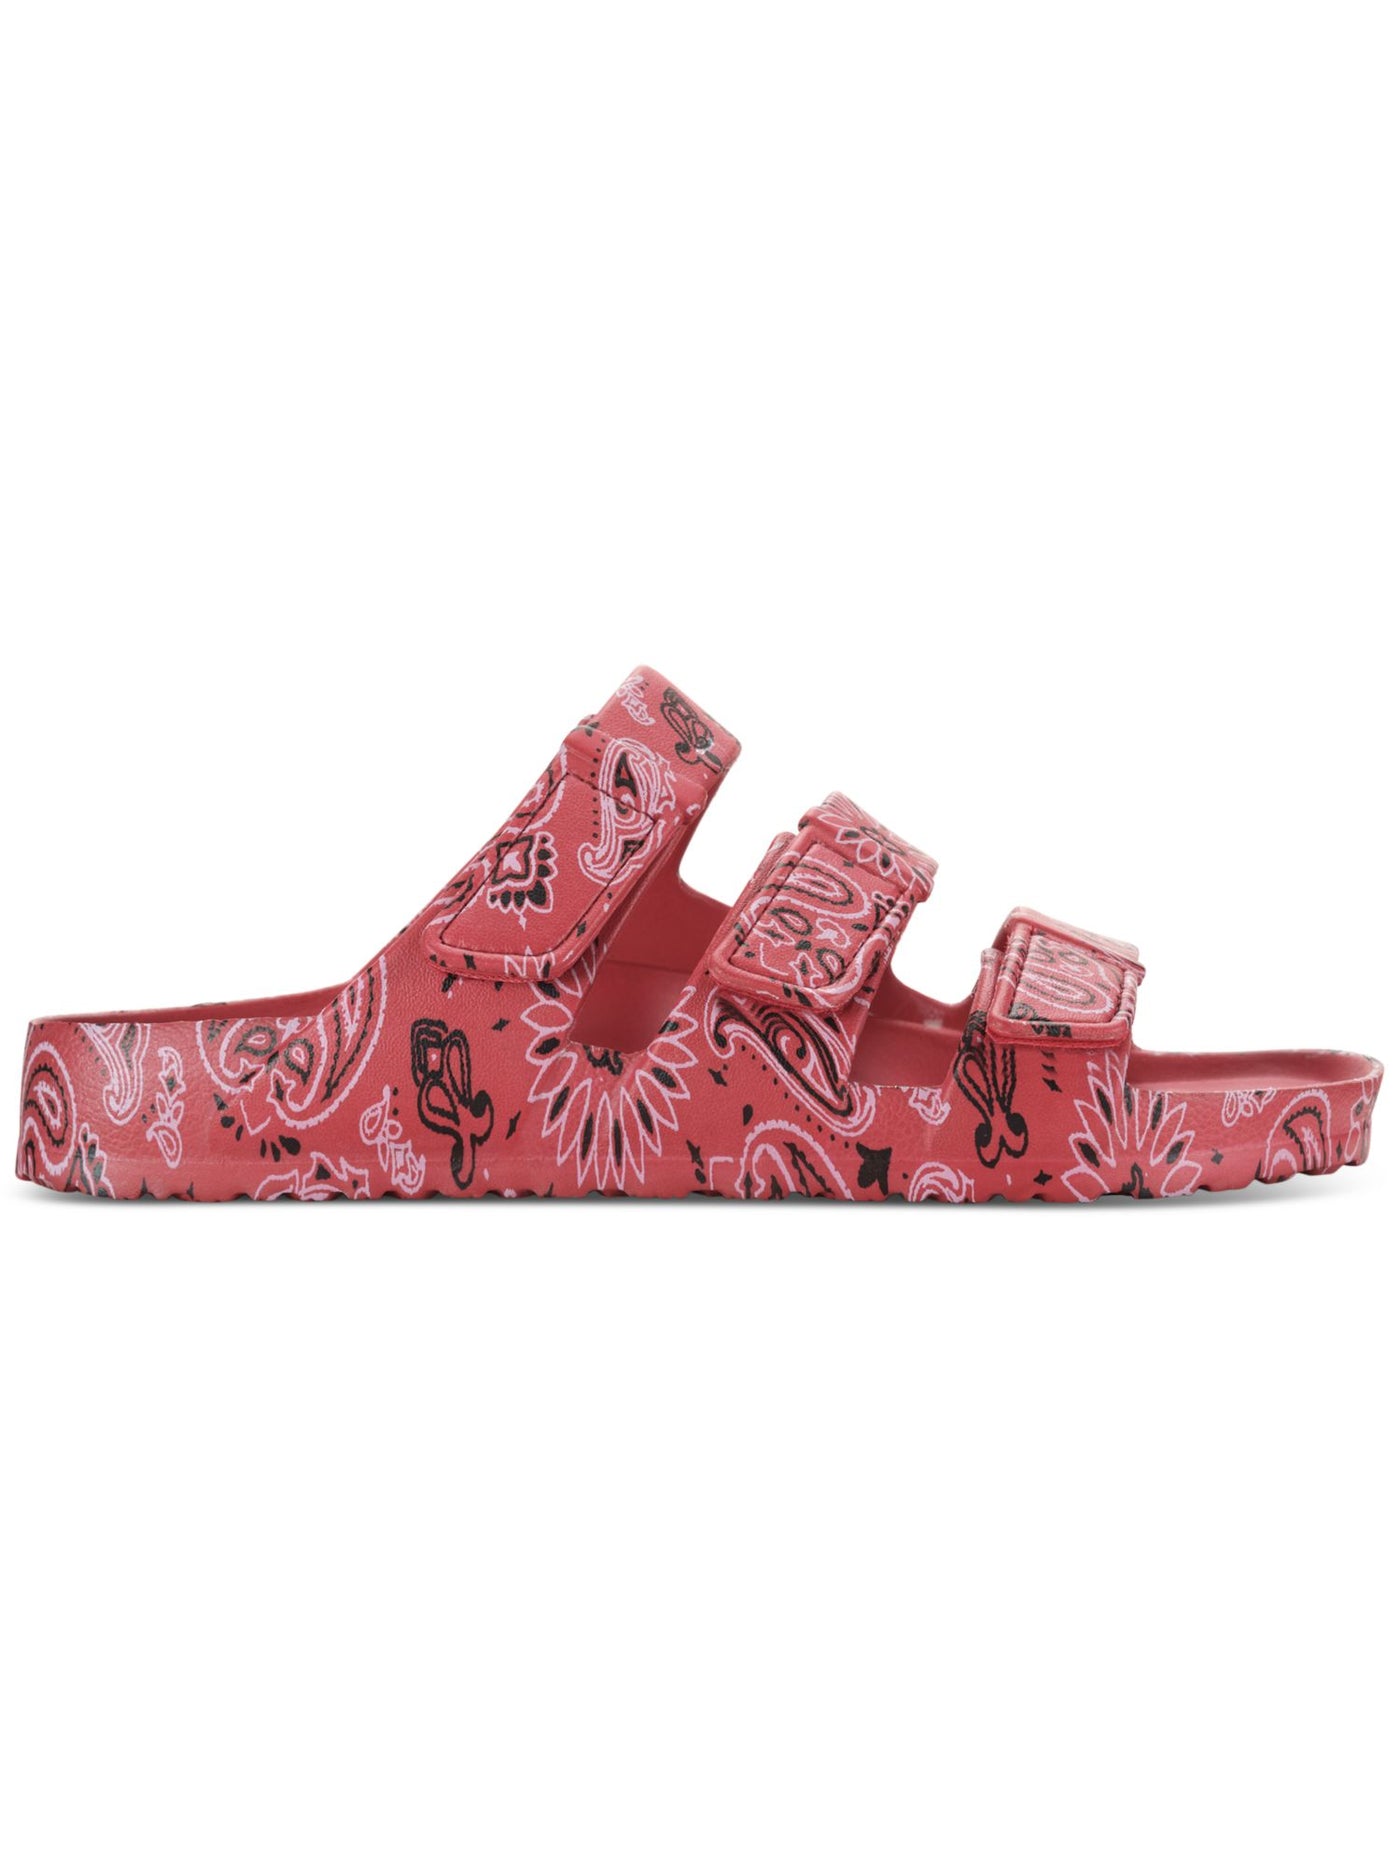 SUN STONE Mens Red Paisley Stay-Put Straps Flexible Sole Adjustable Bowie Open Toe Platform Slip On Slide Sandals Shoes 9 M